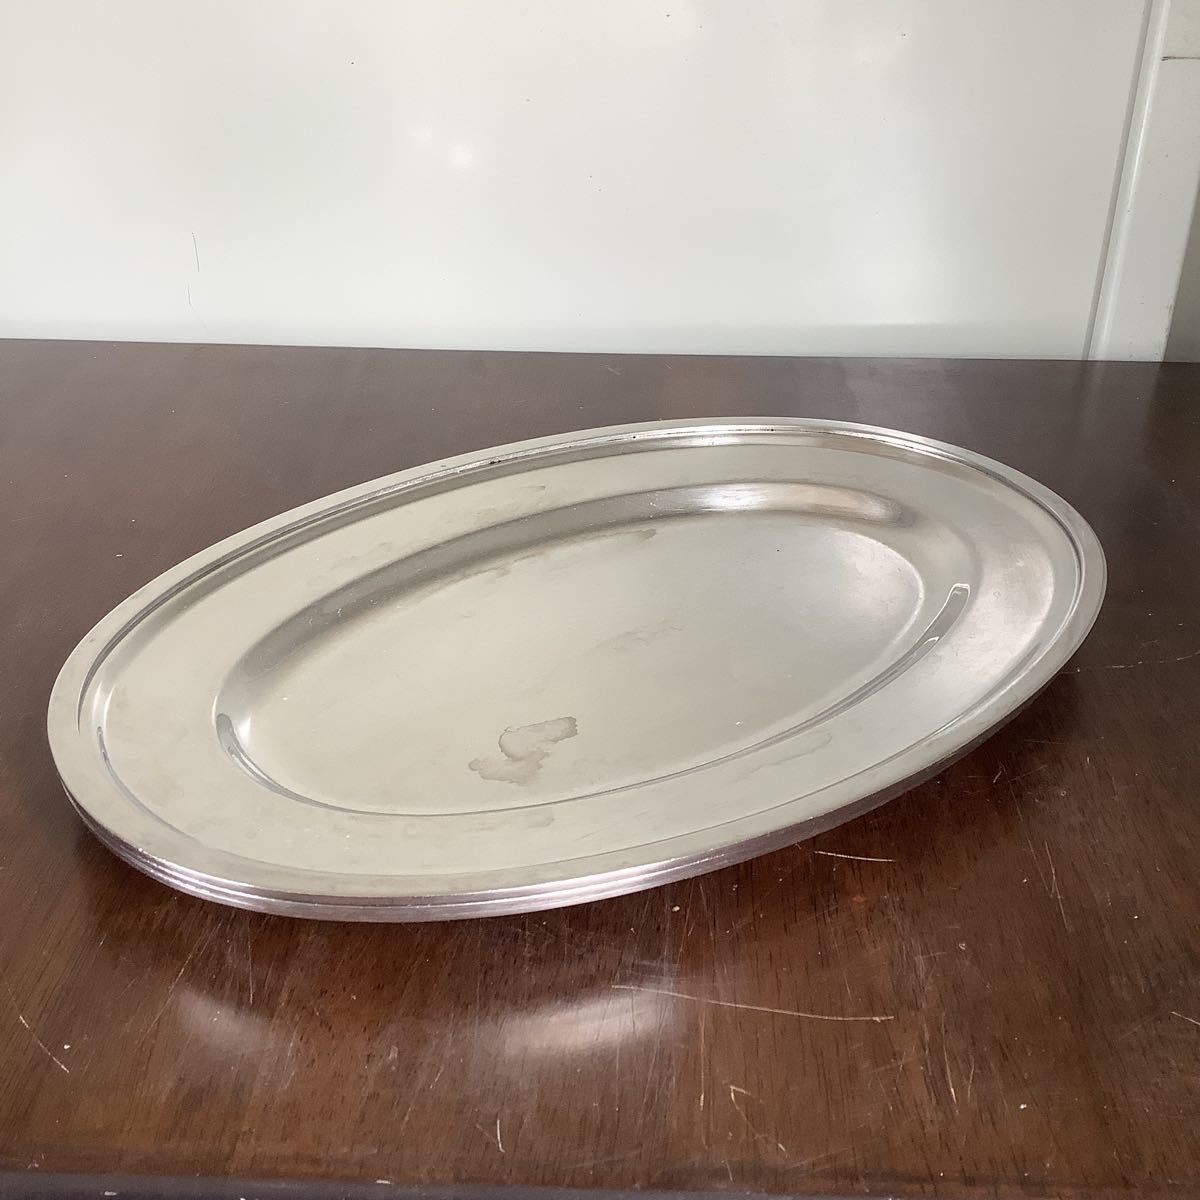  большой flat тарелка нержавеющая сталь тарелка plate тарелка 3 шт. комплект yakiniku тарелка BBQ товары для улицы кемпинг che - ласты g тарелка 28.0×41.0×2.2cm б/у 